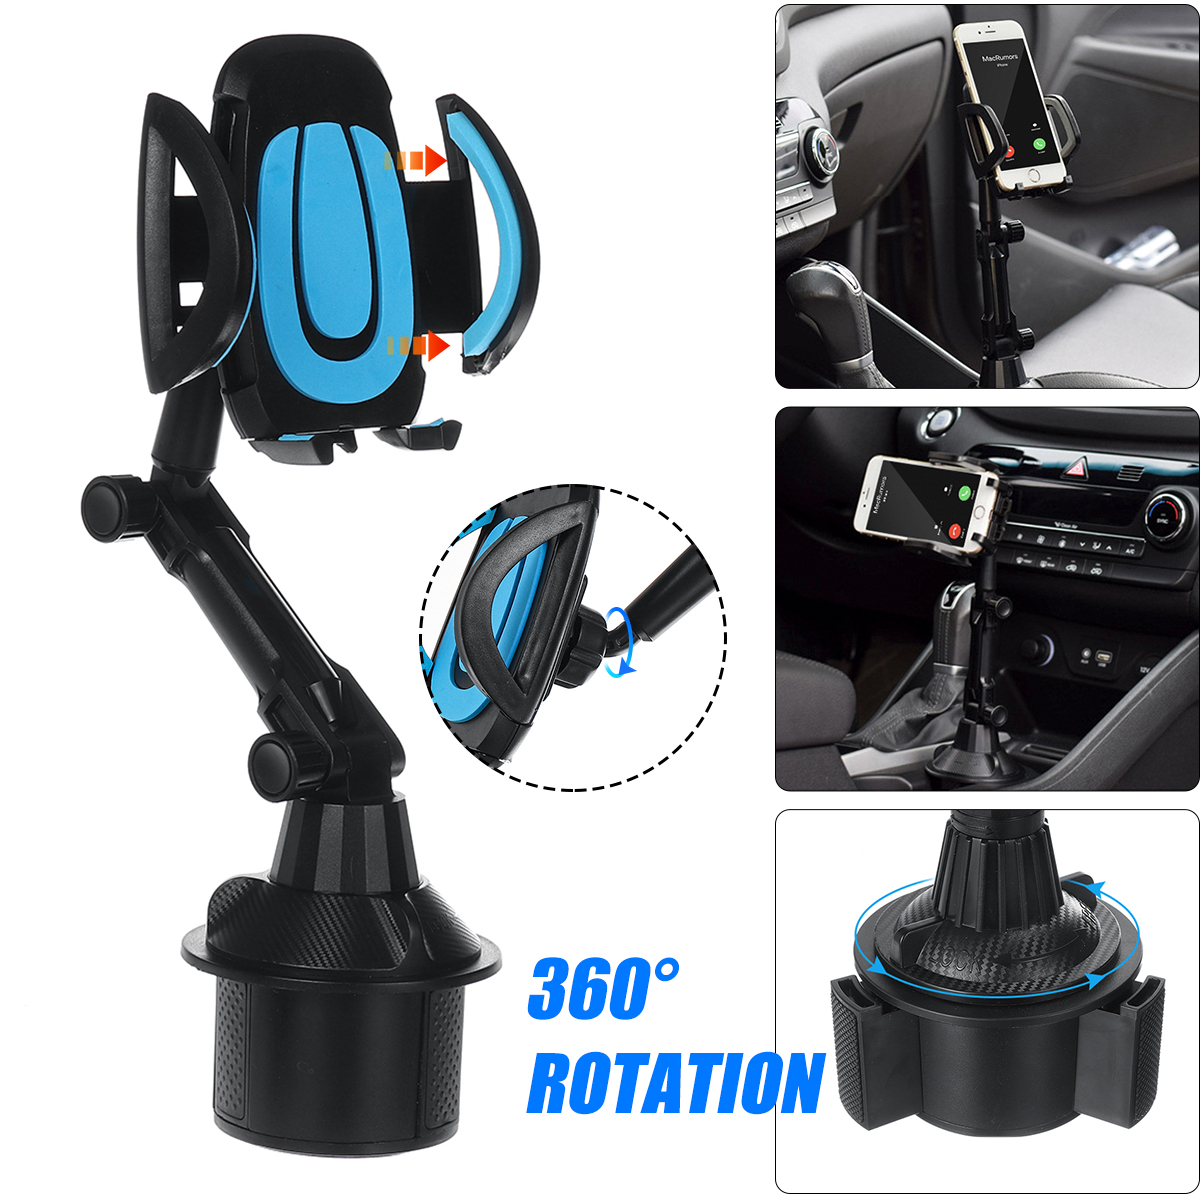 Upgrade-Version-360deg-Rotation-Car-Phone-Mount-Gooseneck-Water-Cup-Holder-Bracket-for-4-6-inch-Devi-1777135-2